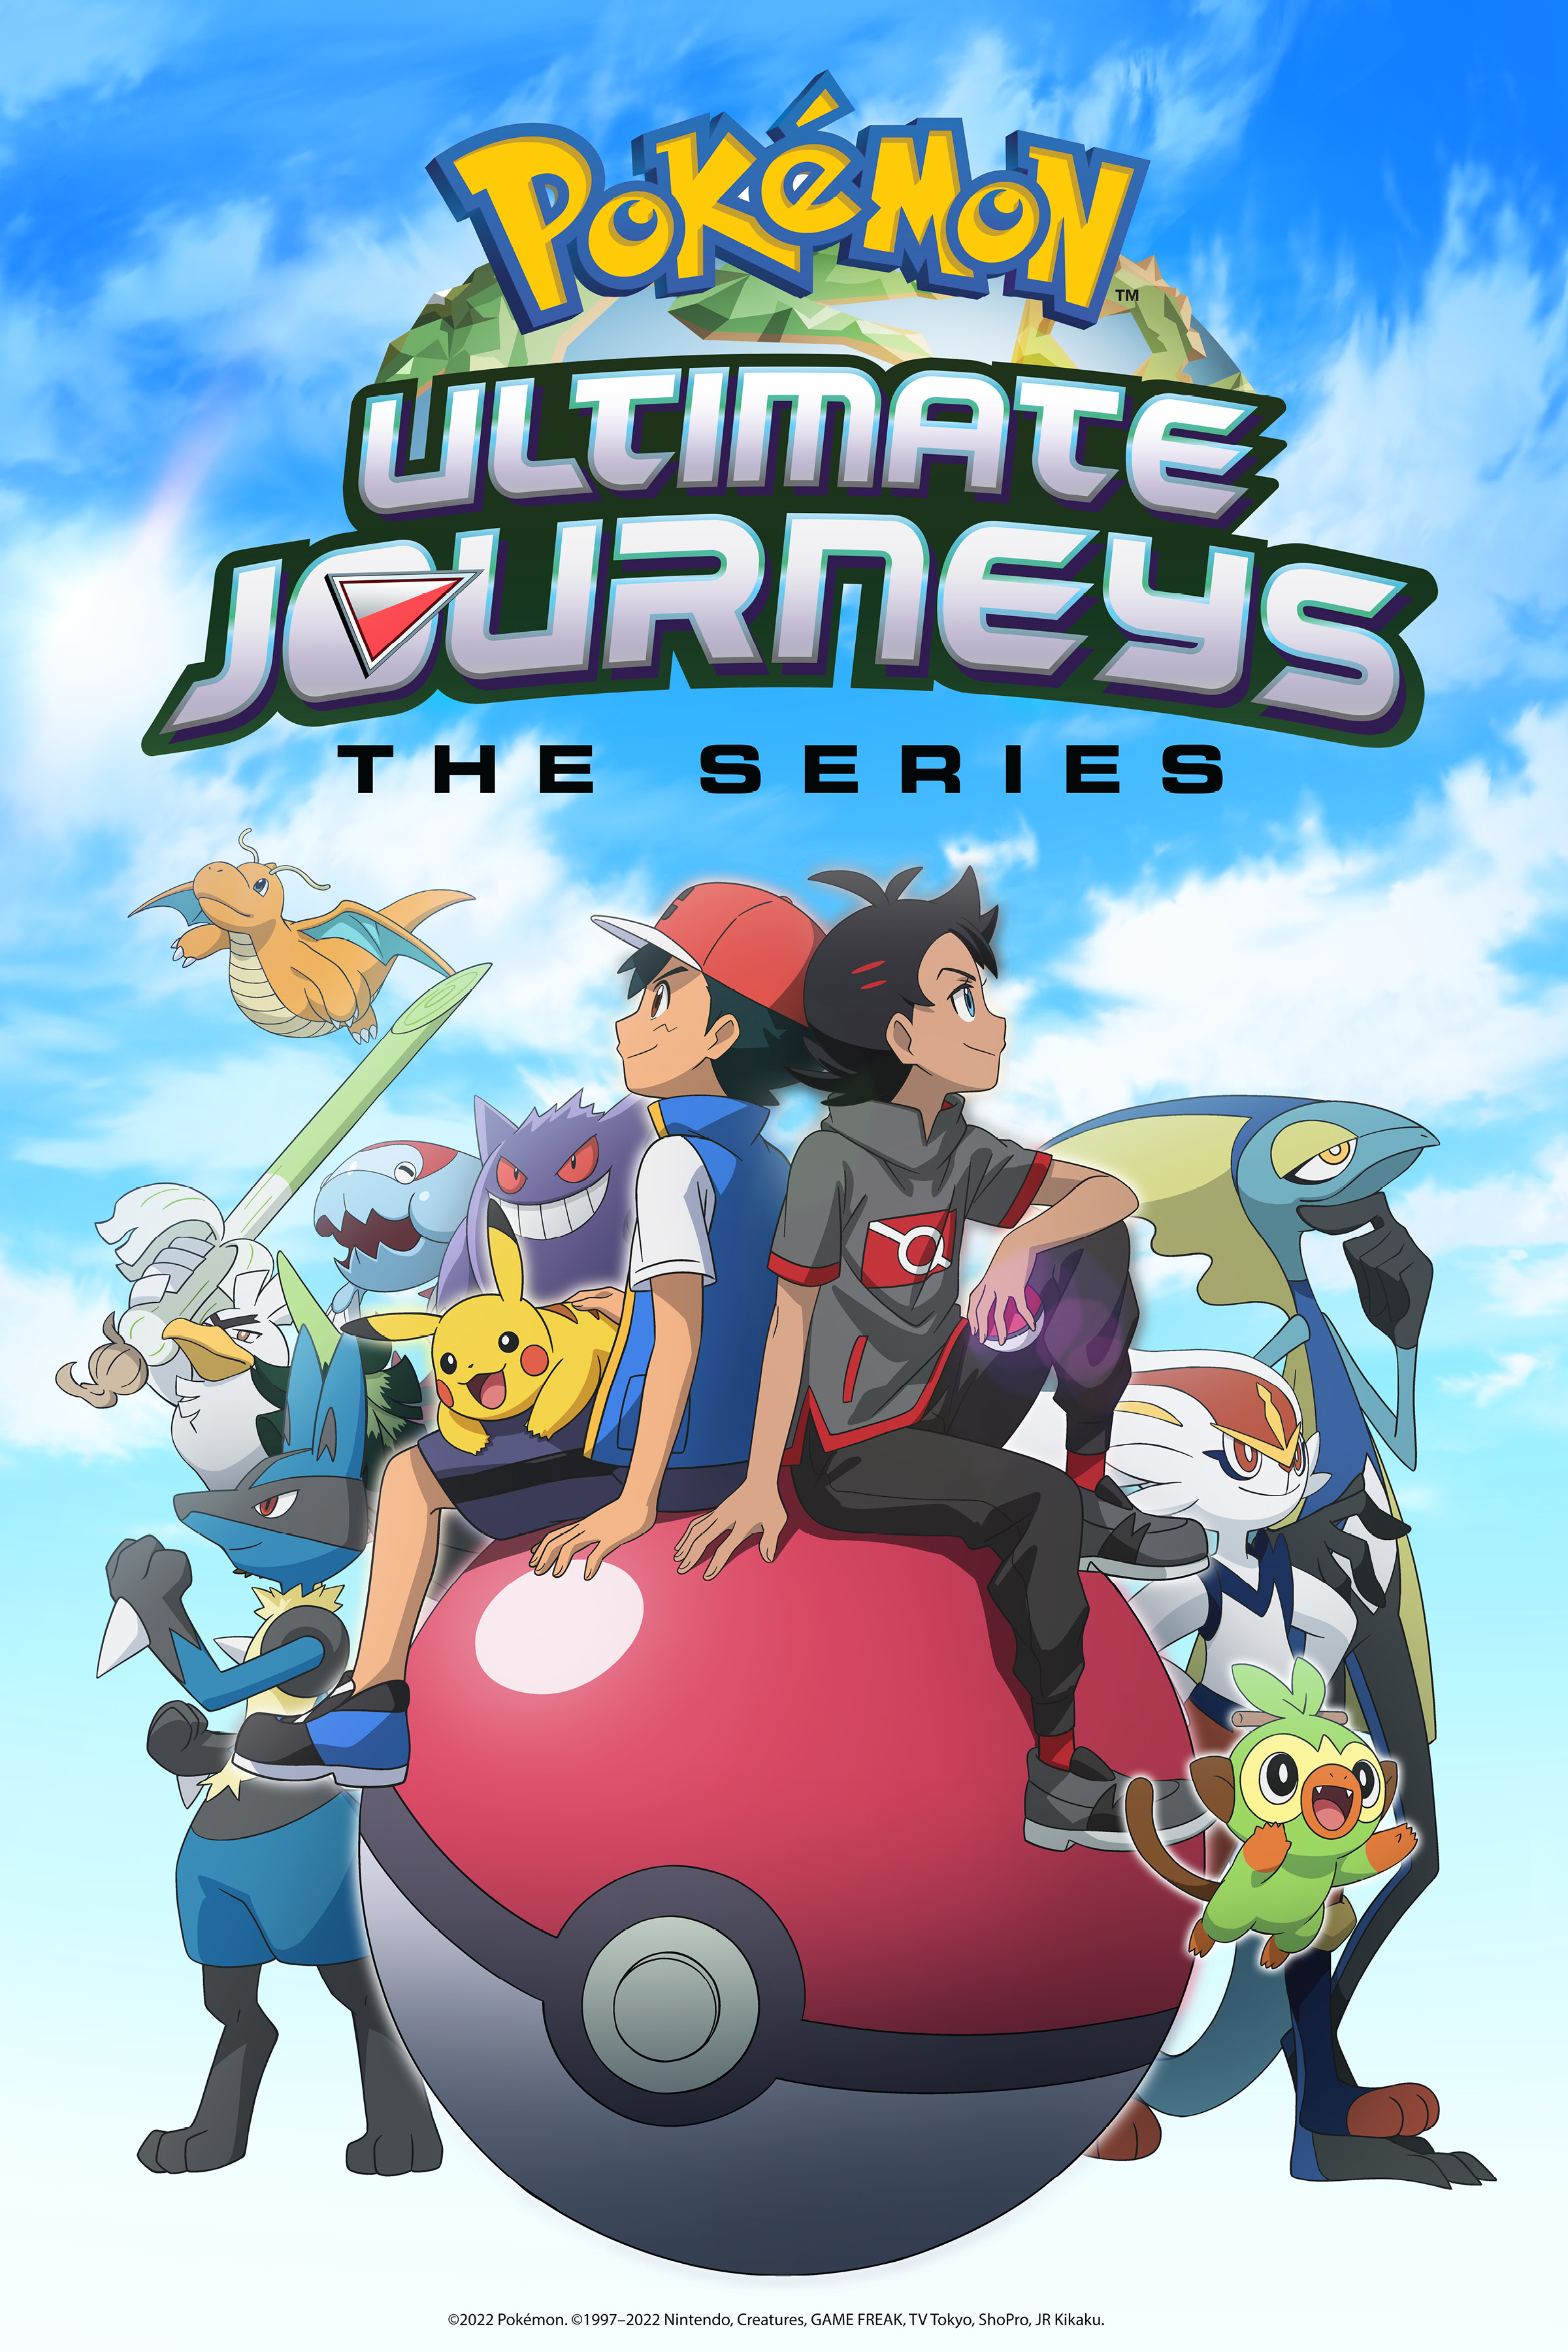 Pokmon Ultimate Journeys The Series Premiering Around the World